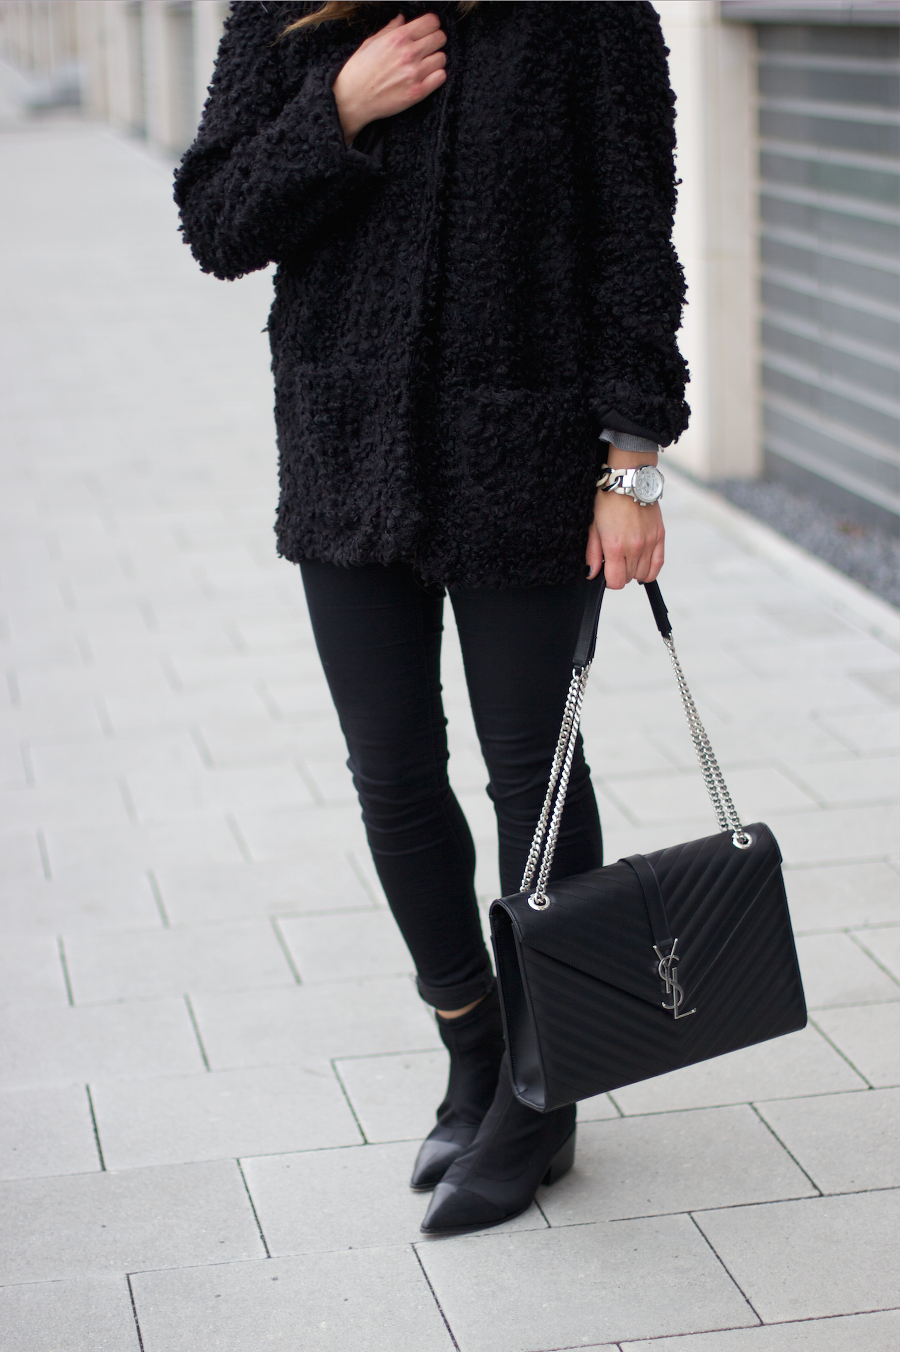 Black Fluffy Coat YSL Bag Outfit